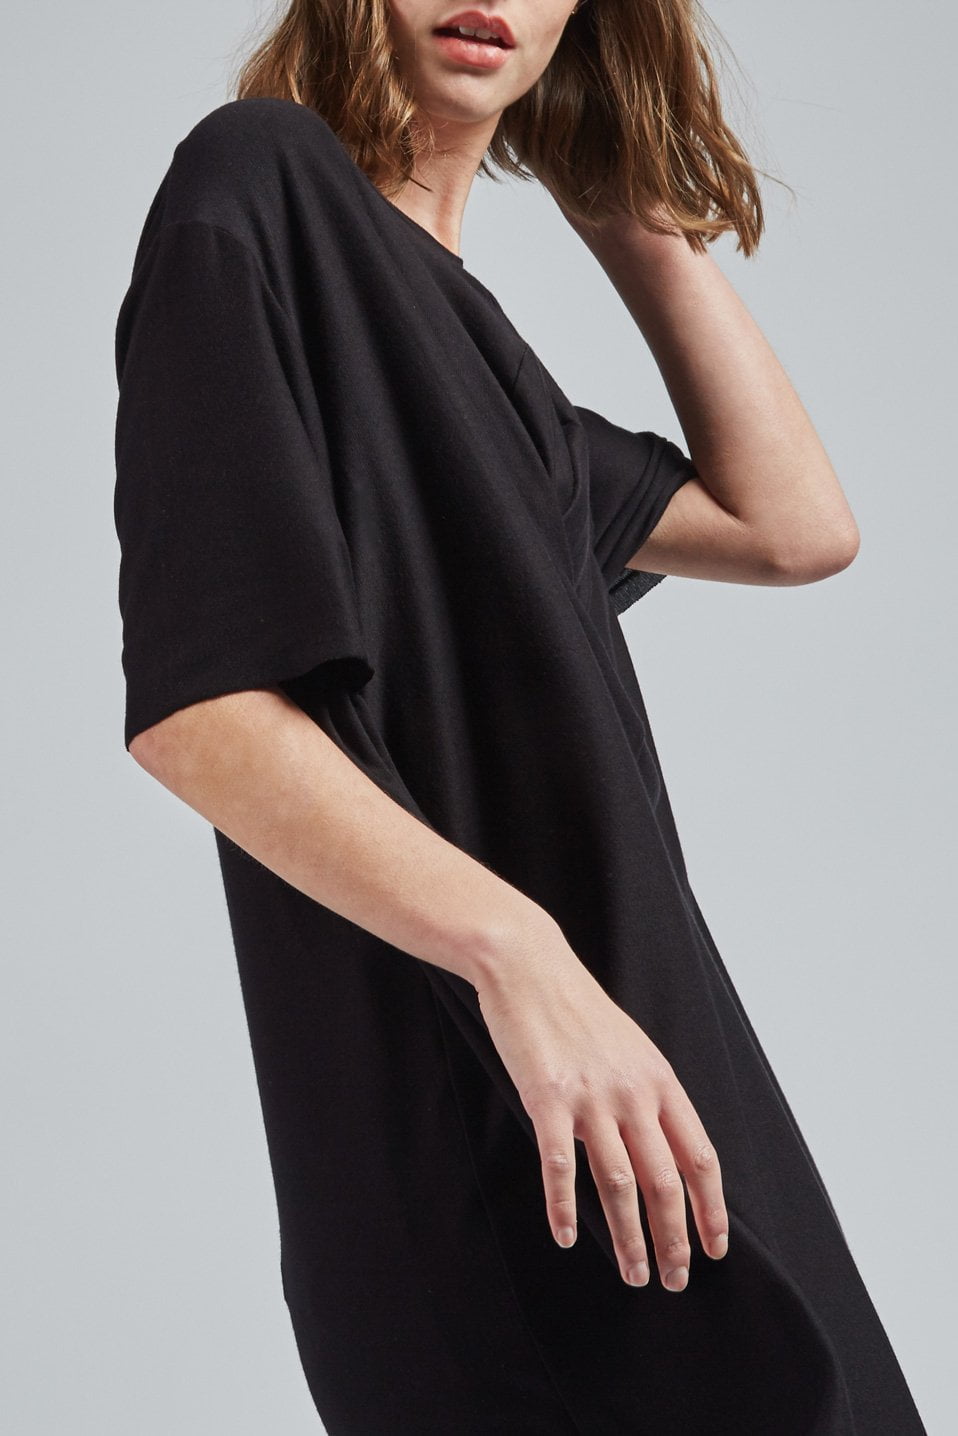 Women's Mamba Black 4-Sleeve Shirt - Uztzu Clothing - Shop Super 4 in 1 T-shirts, Pants and hoodies online!